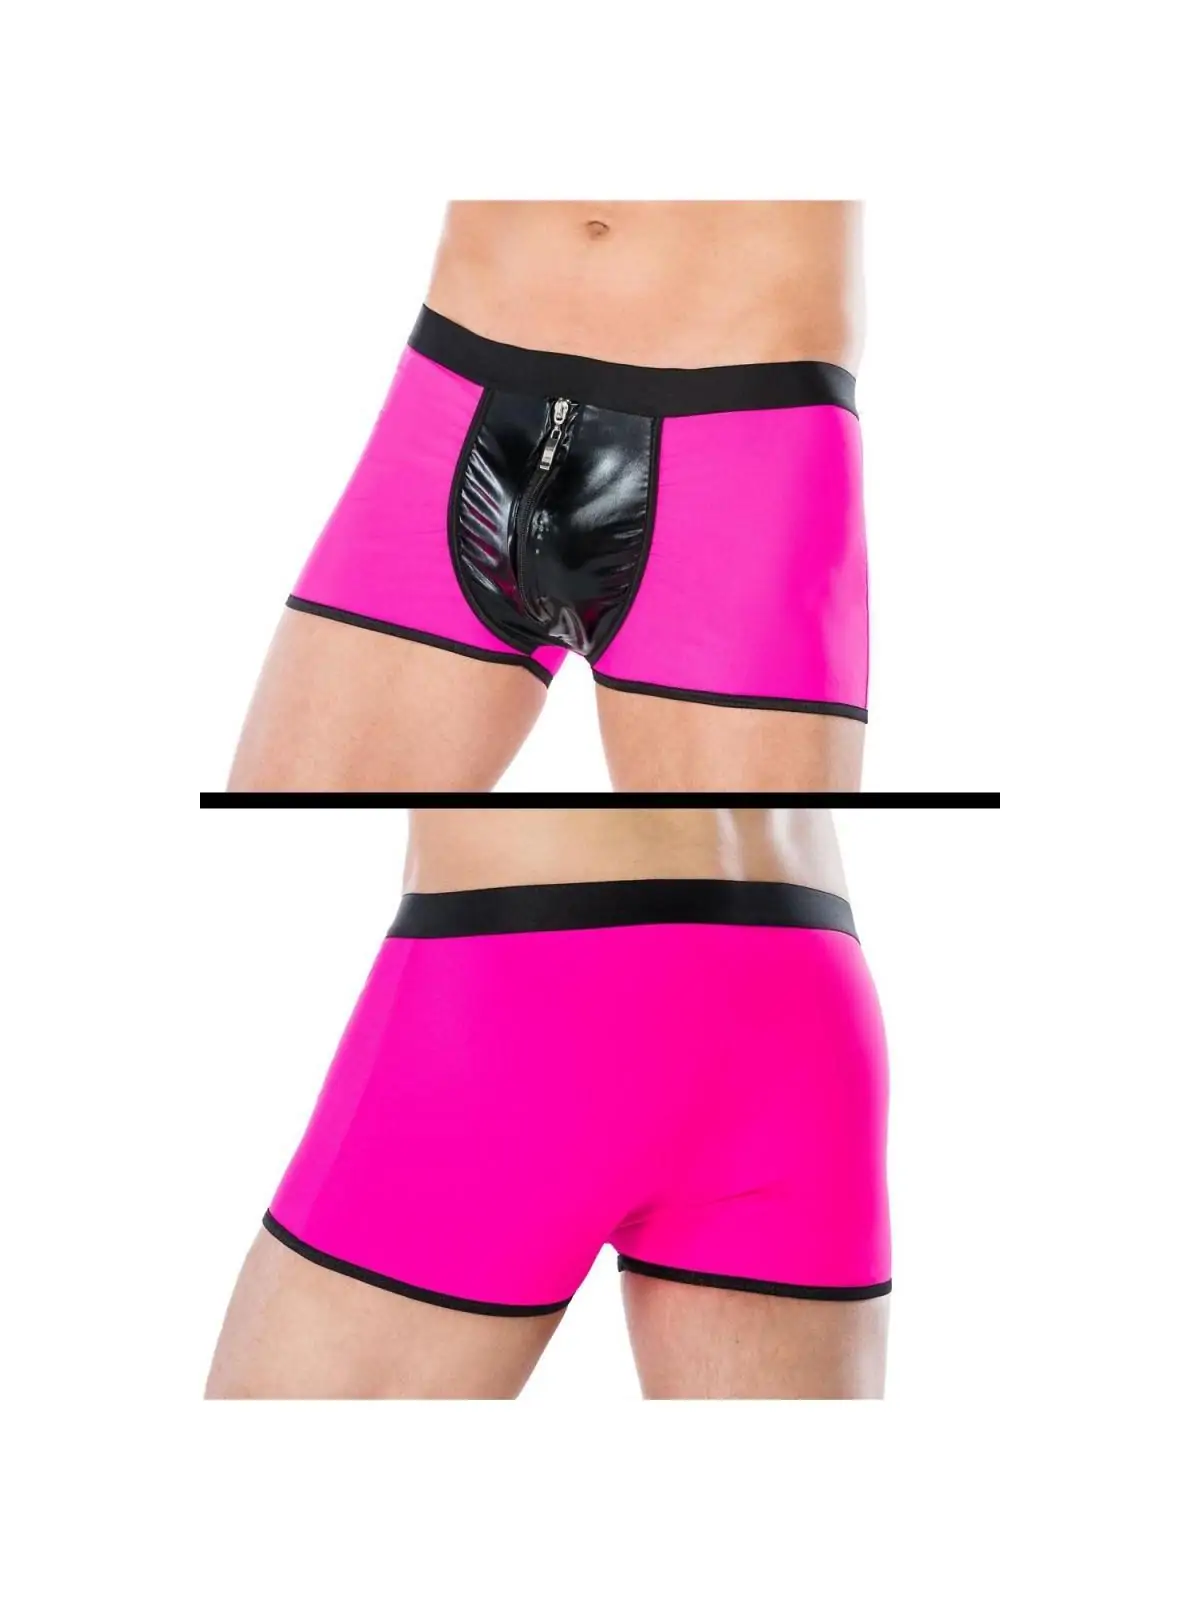 Boxershorts Pink Mc/9077 von Andalea